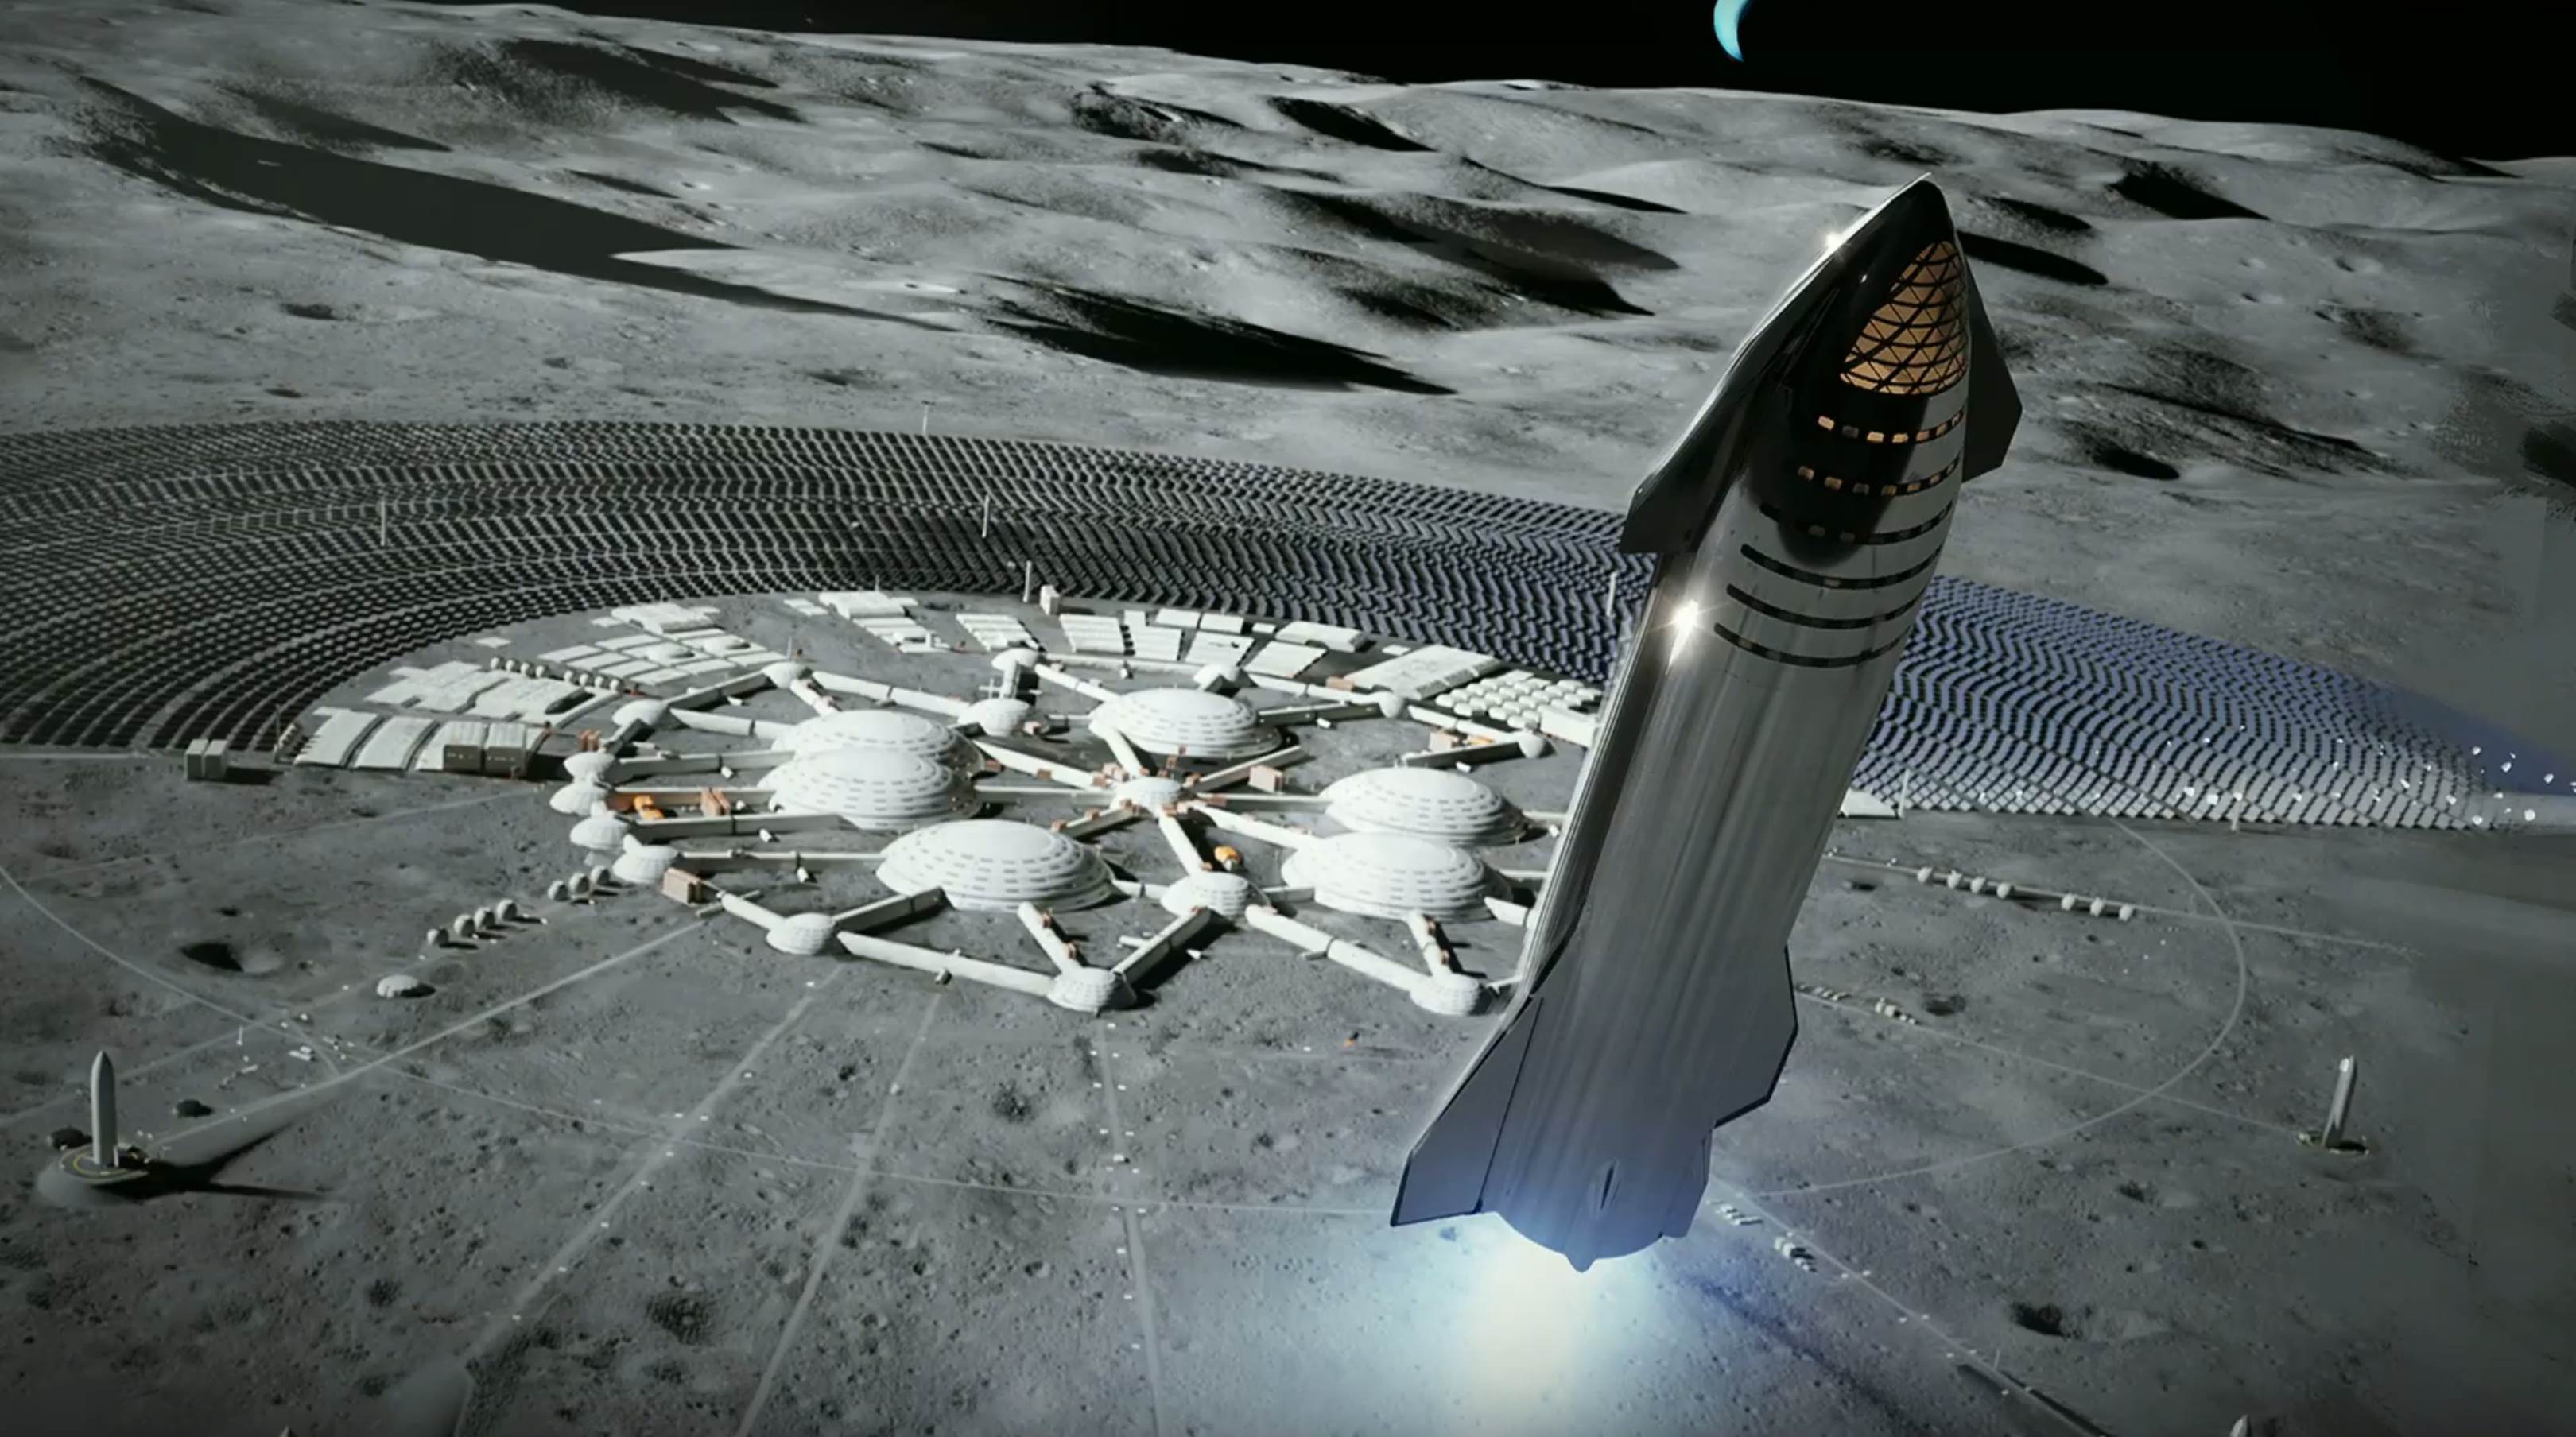 Starship-2019-Moon-base-render-SpaceX-1